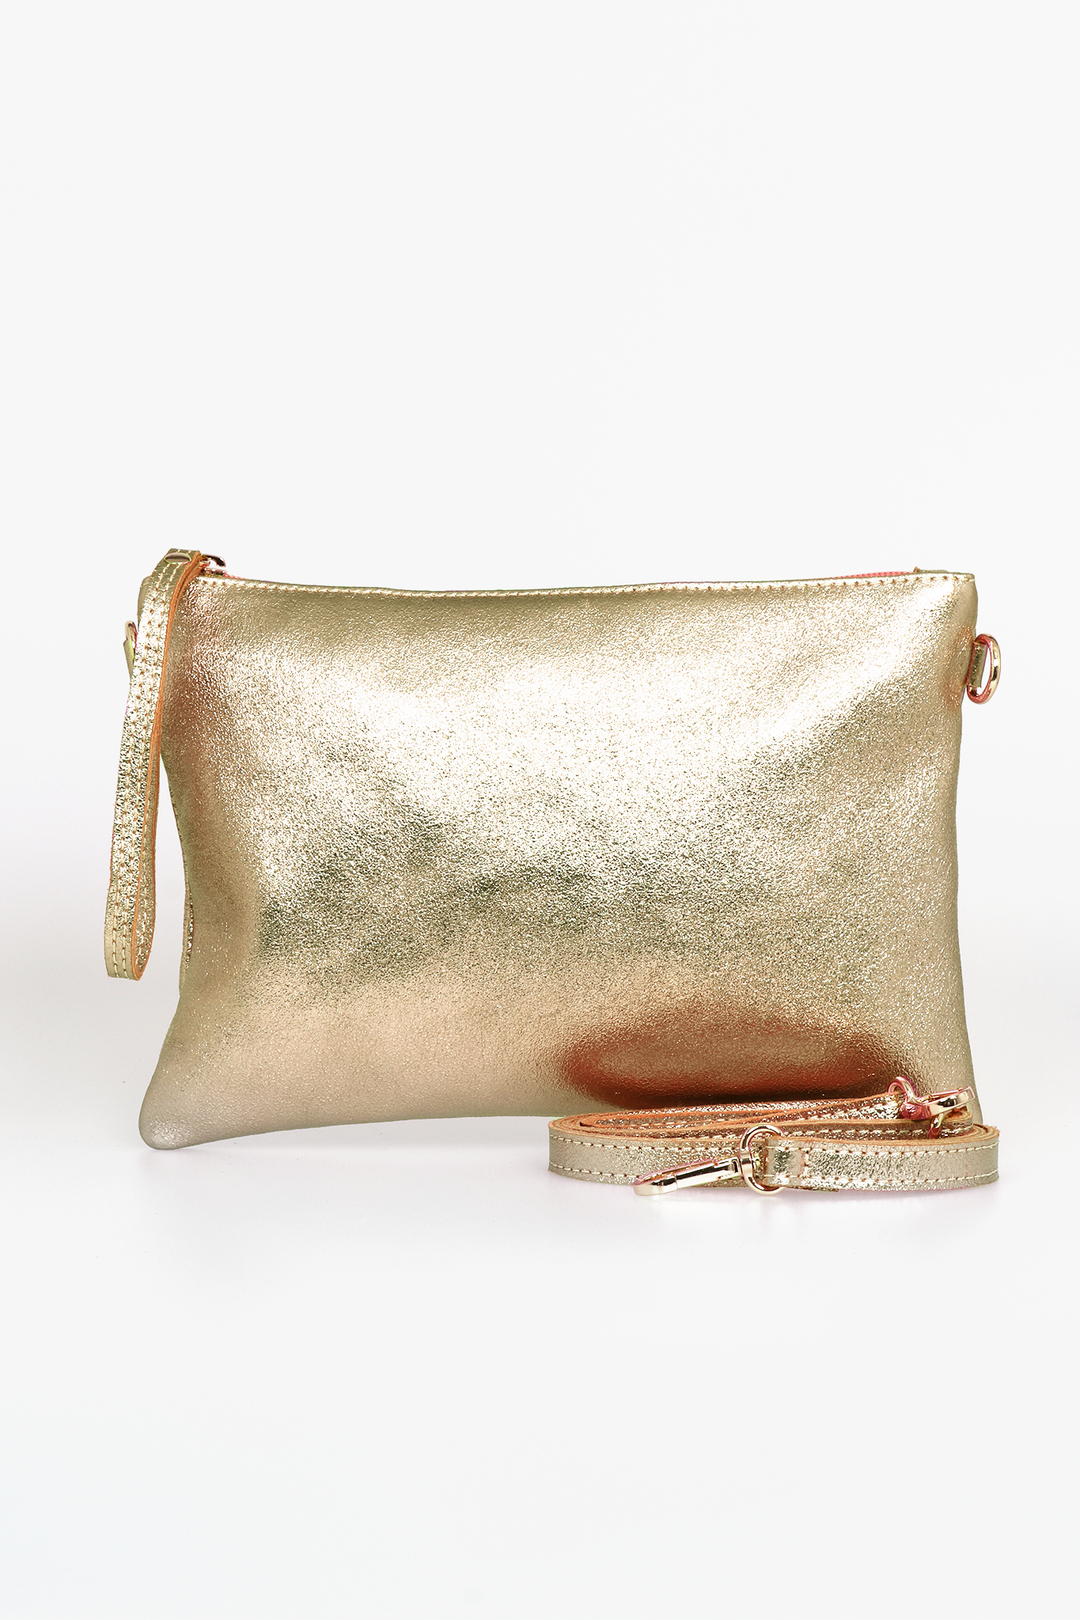 Gold Large Leather Wristlet Clutch Bag